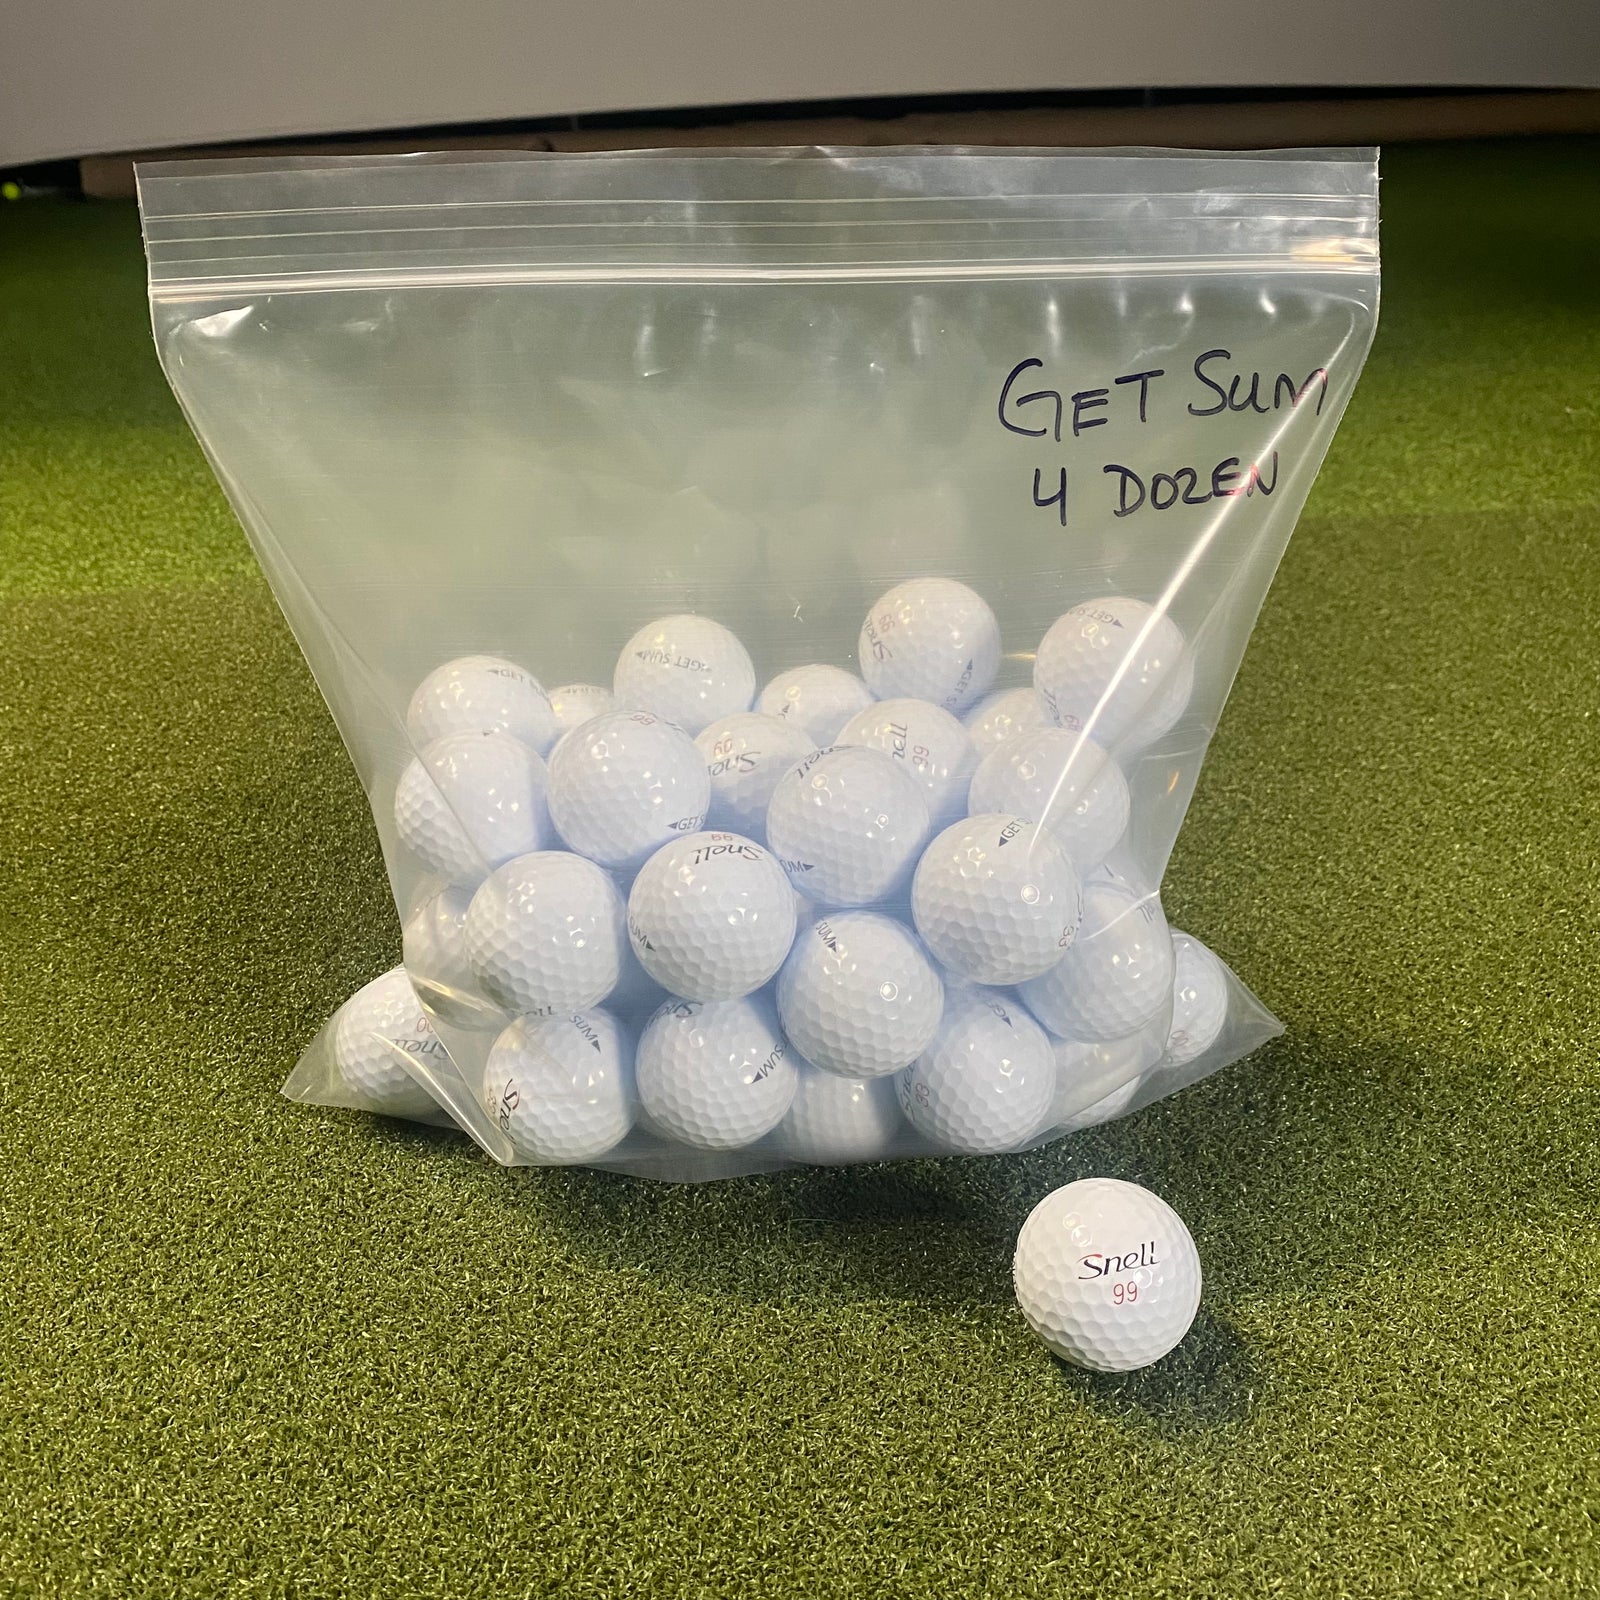 Closeout - Get Sum - White (4 Dz. Bags) Golf Ball Snell Golf White  